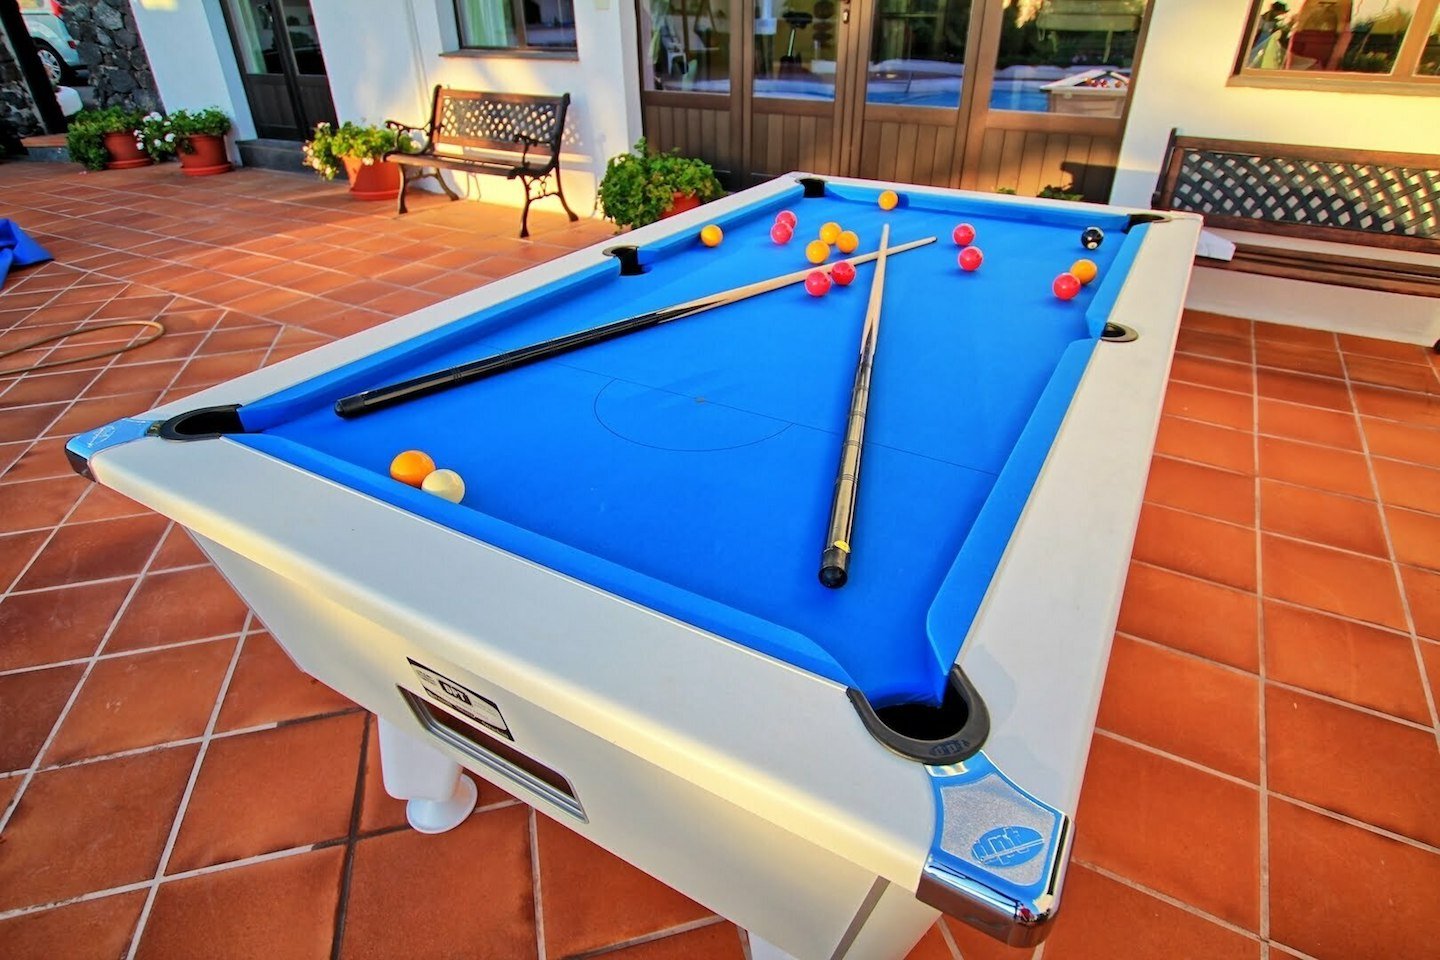 Villa Olivina - Lanzarote - Pool Area with American Pool Table